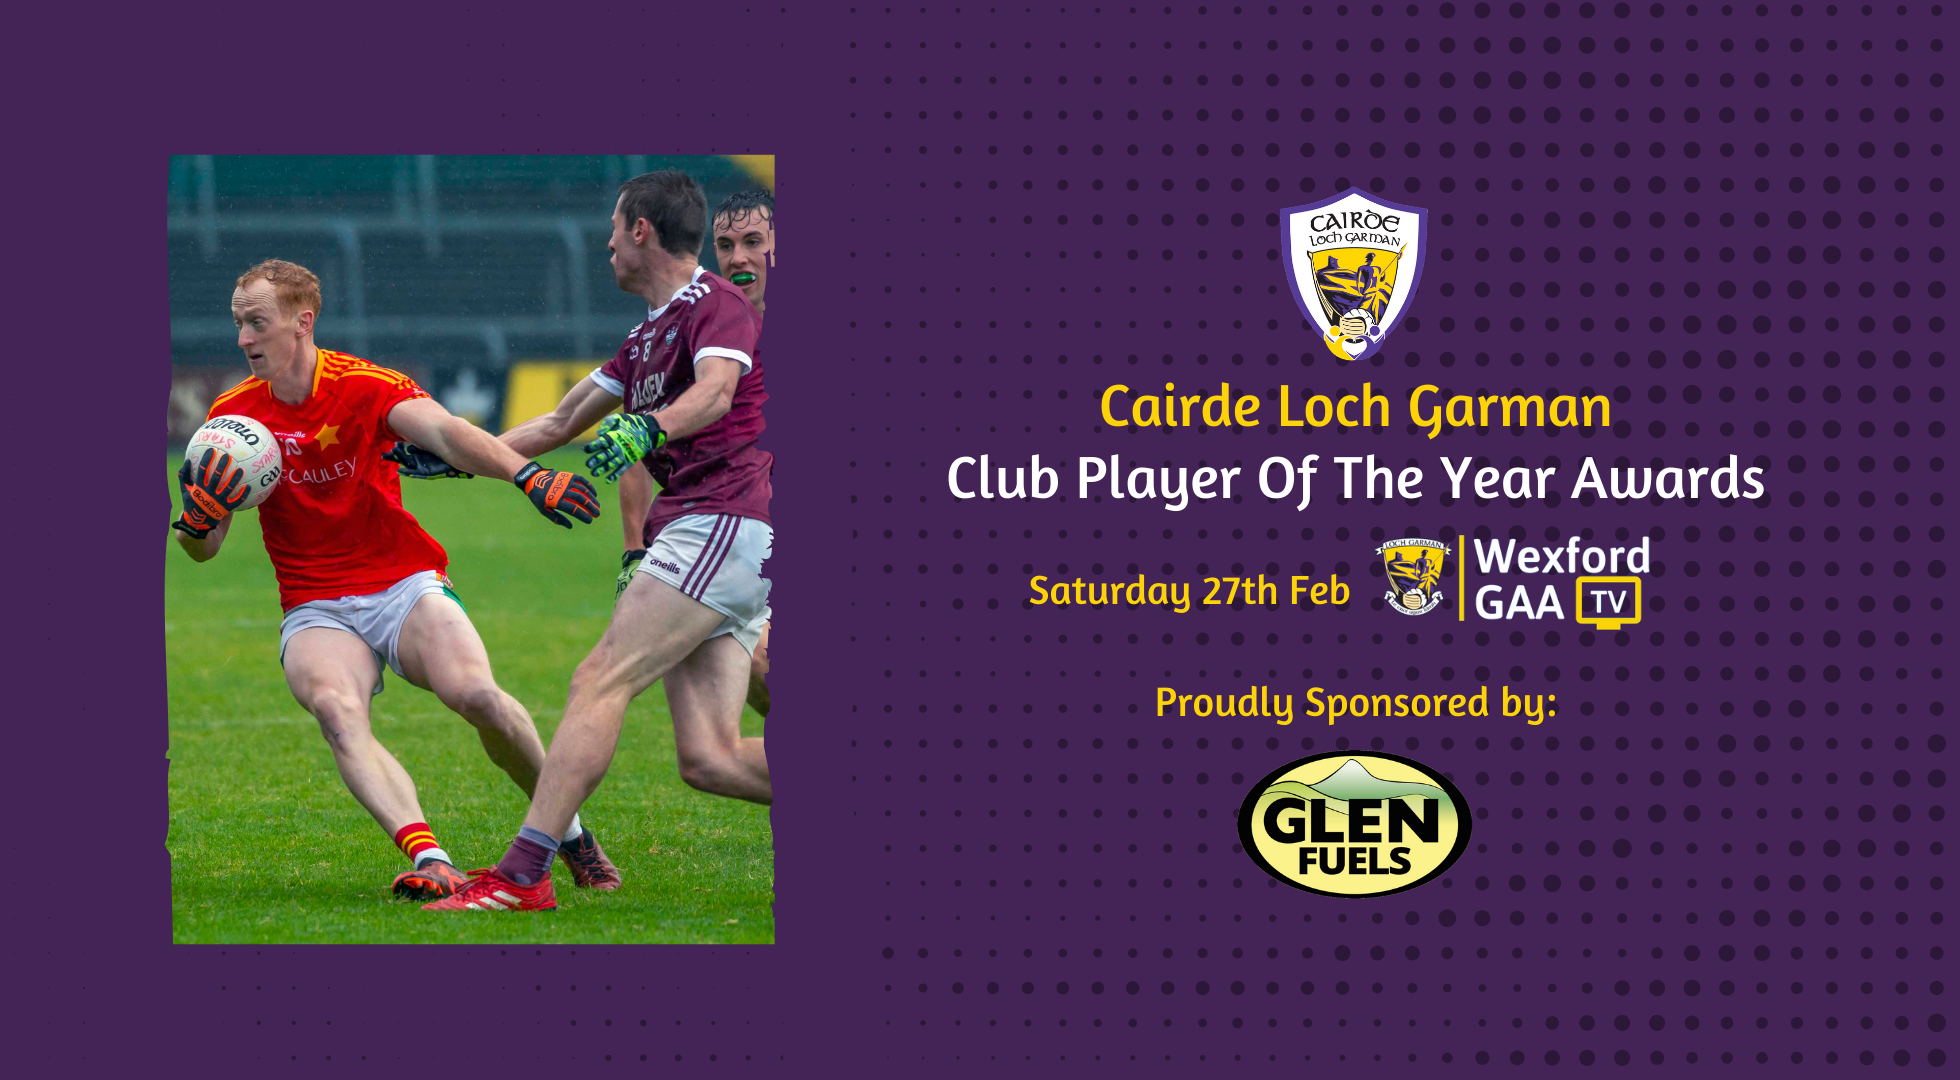 Cairde Loch Garman Club Player Awards – Football Nominations